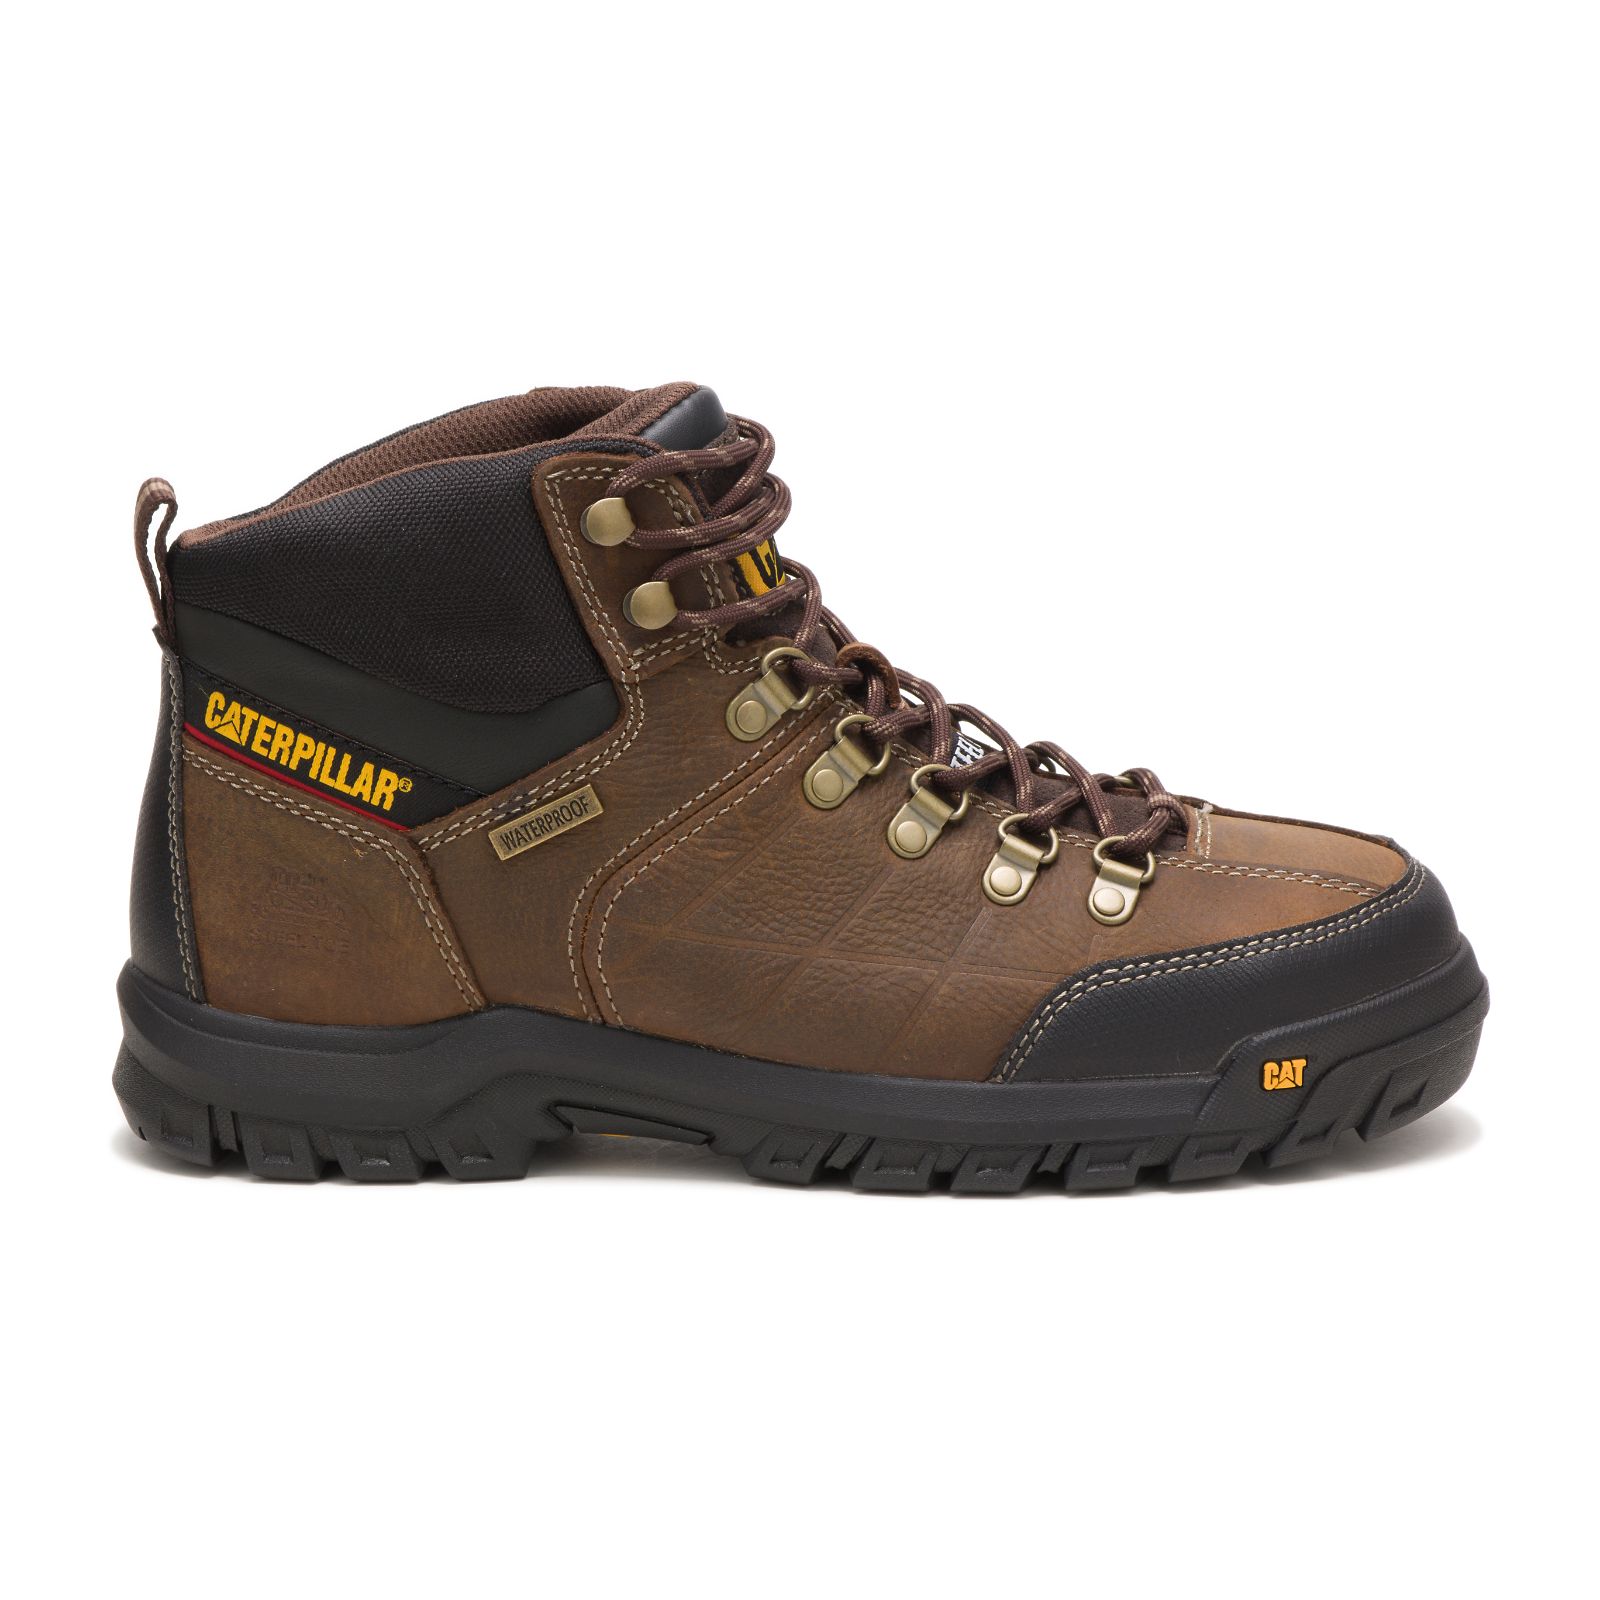 Caterpillar Boots Sale - Caterpillar Threshold Waterproof Steel Toe Mens Work Boots Brown (540237-ZXM)